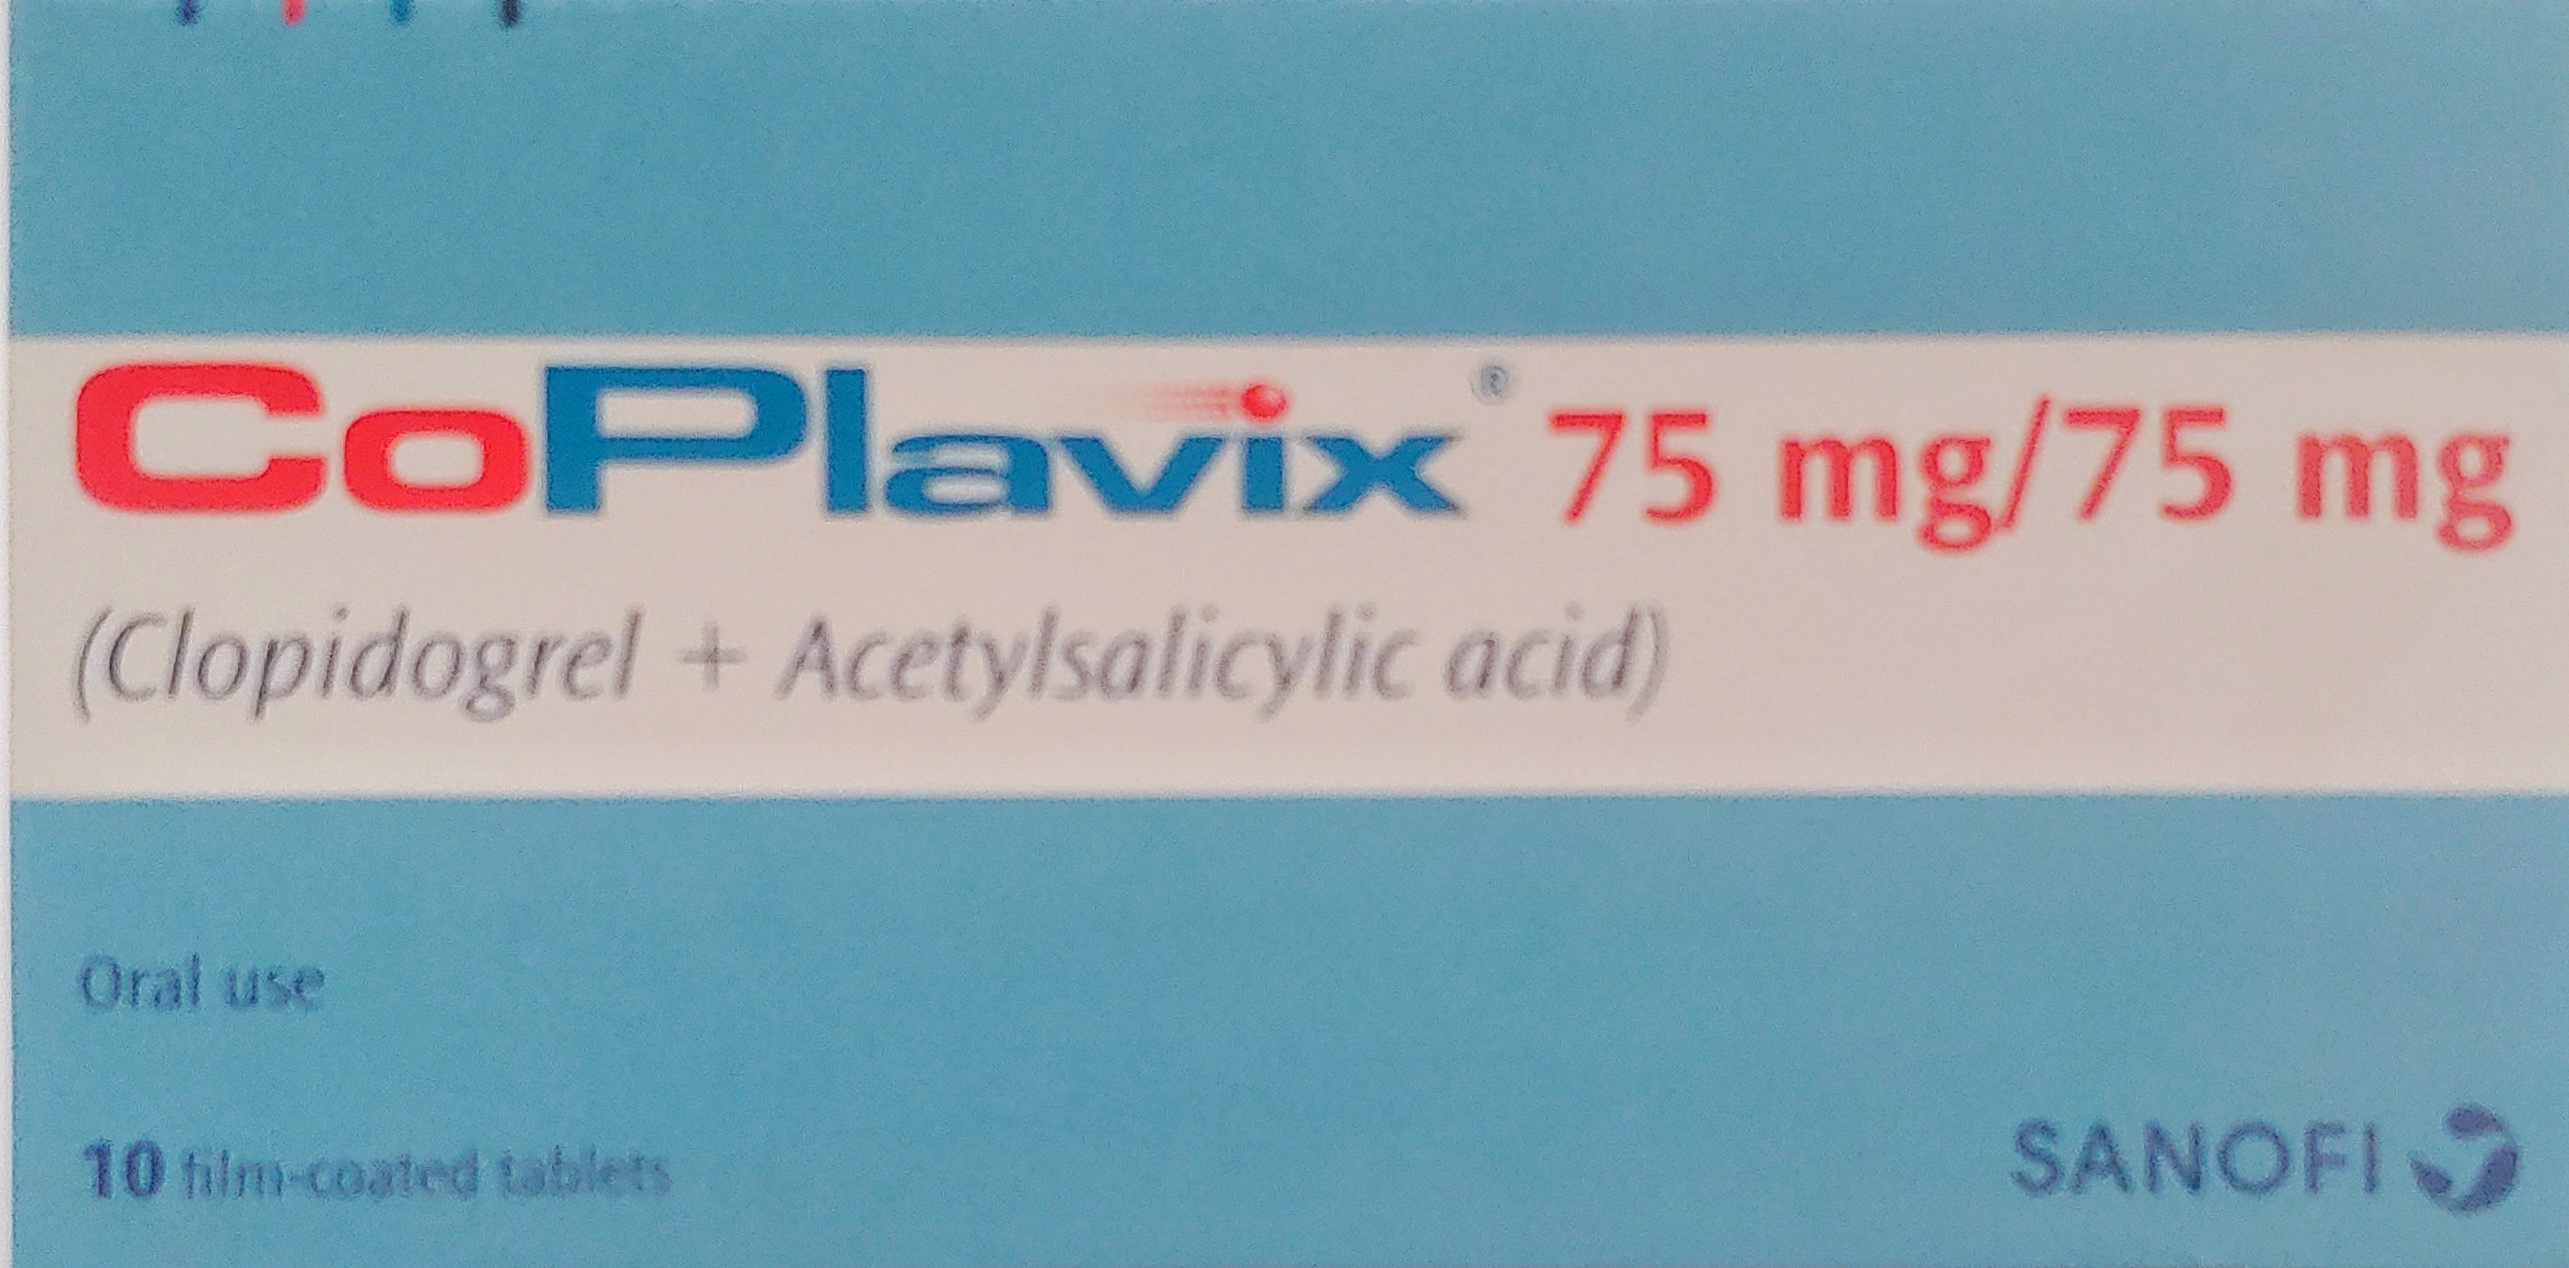 Co-Plavix 75/75mg Tablet